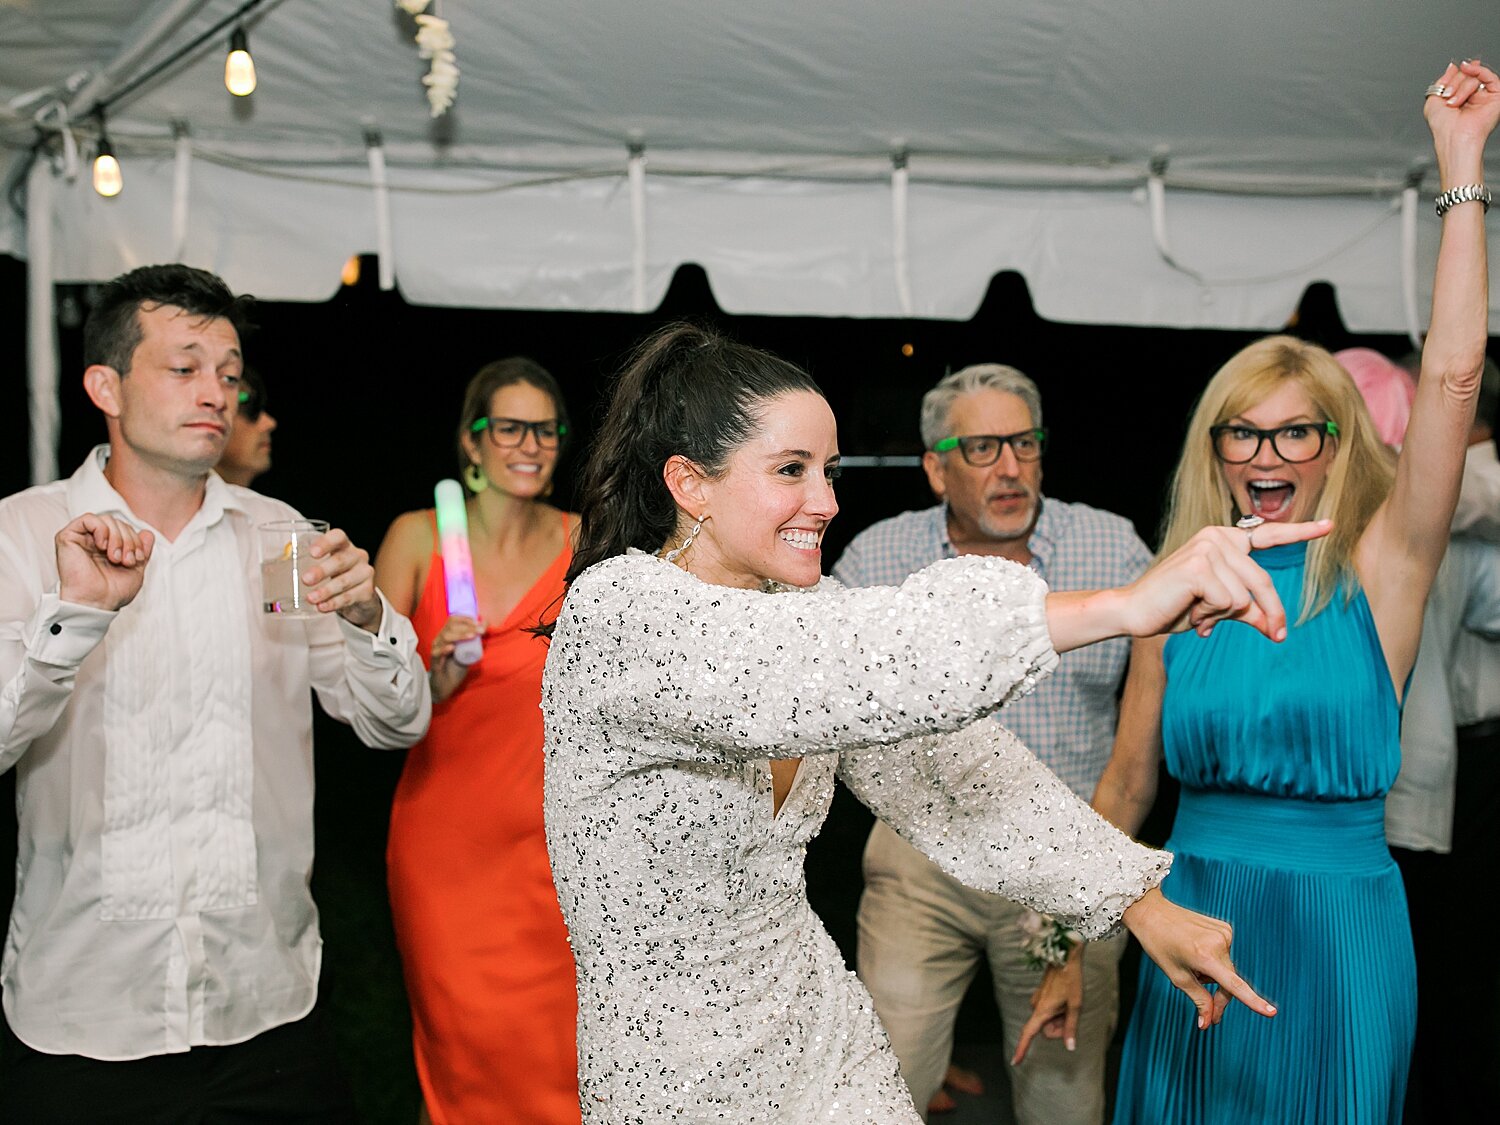 bride dances during wedding reception | Stylish Private Home Wedding Inspiration | Asher Gardner Photography